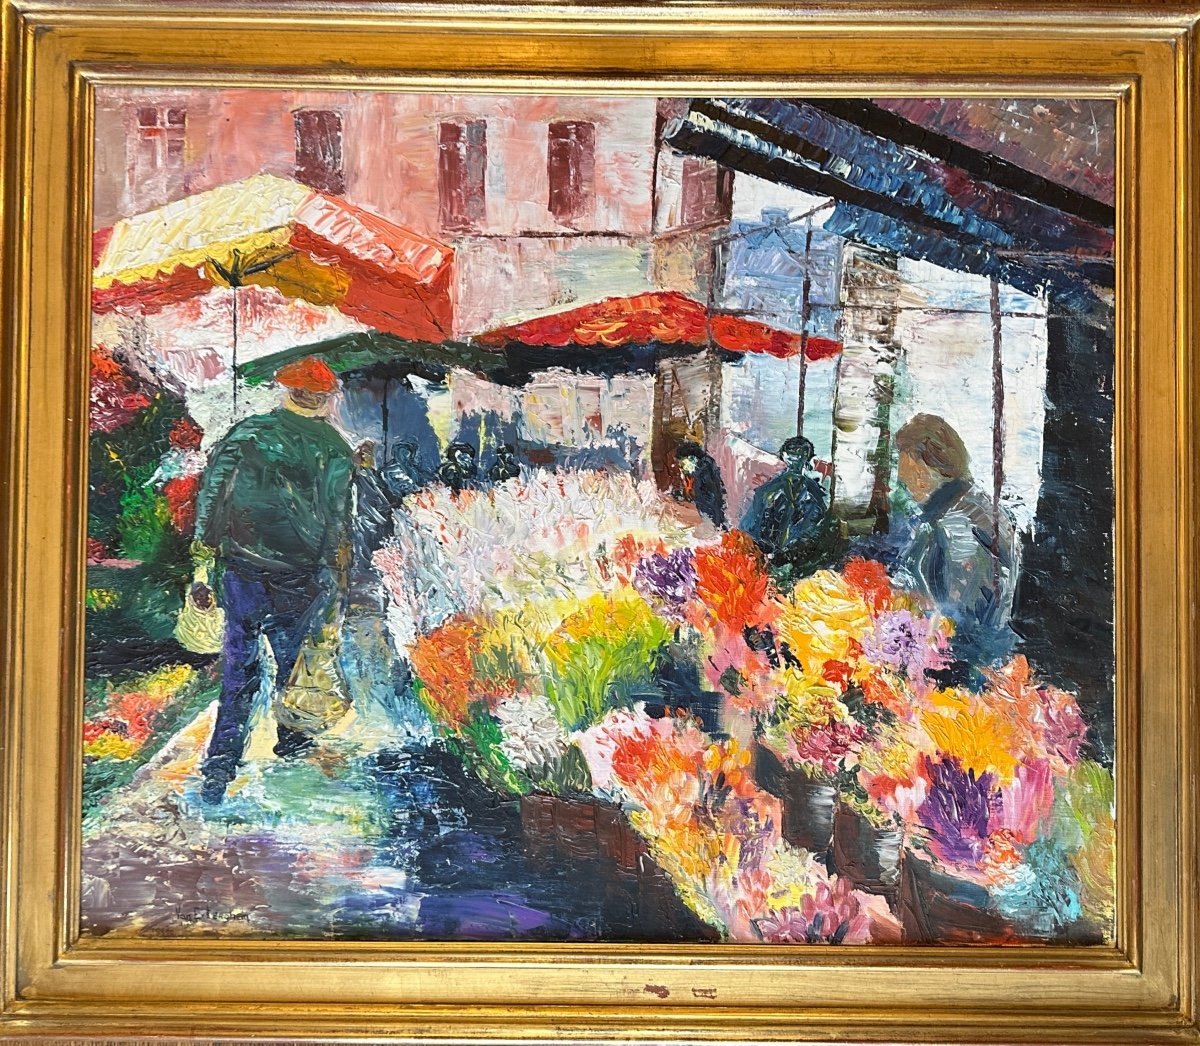 “the Flower Market” Oil On Canvas By Van Extergem 20th Century. 